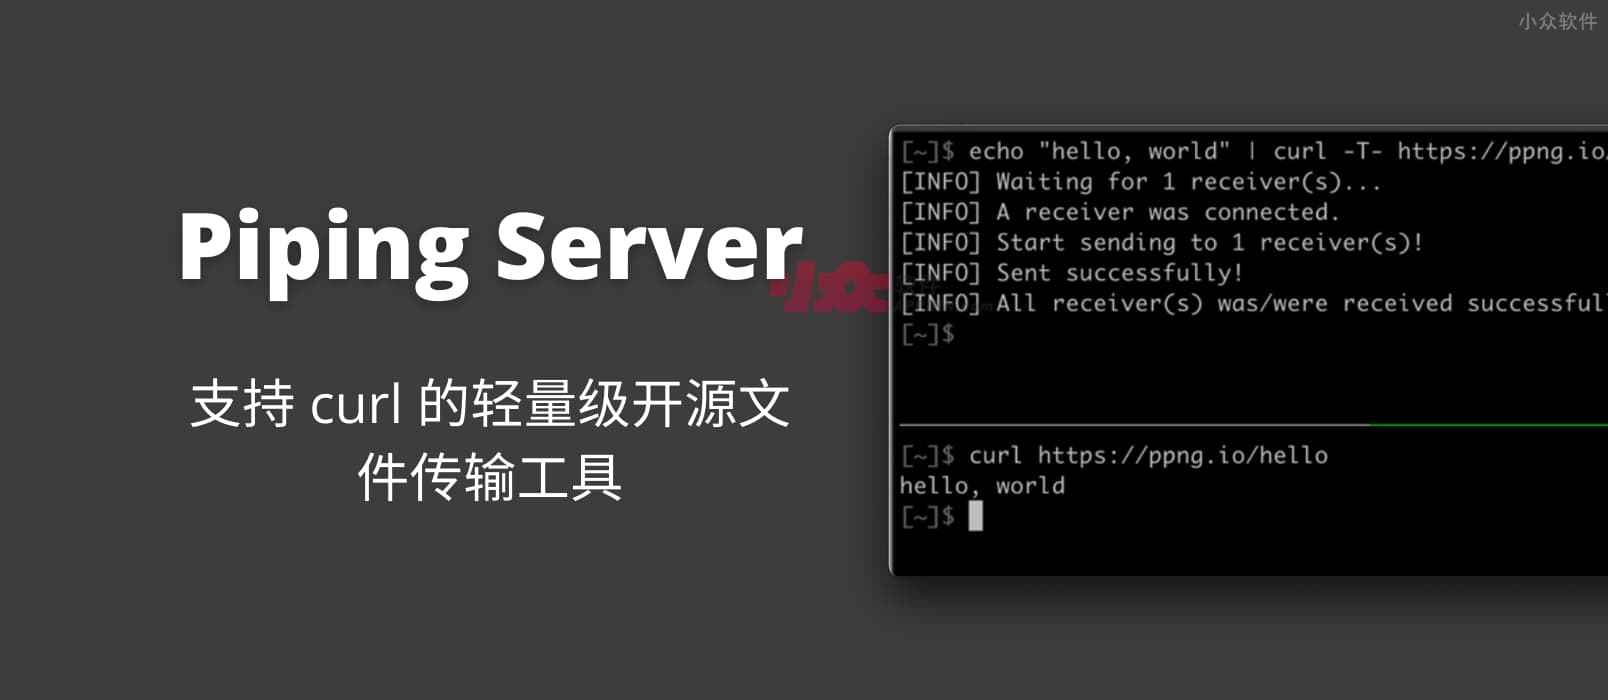 Piping Server – 支持 curl 的轻量级开源文件传输工具